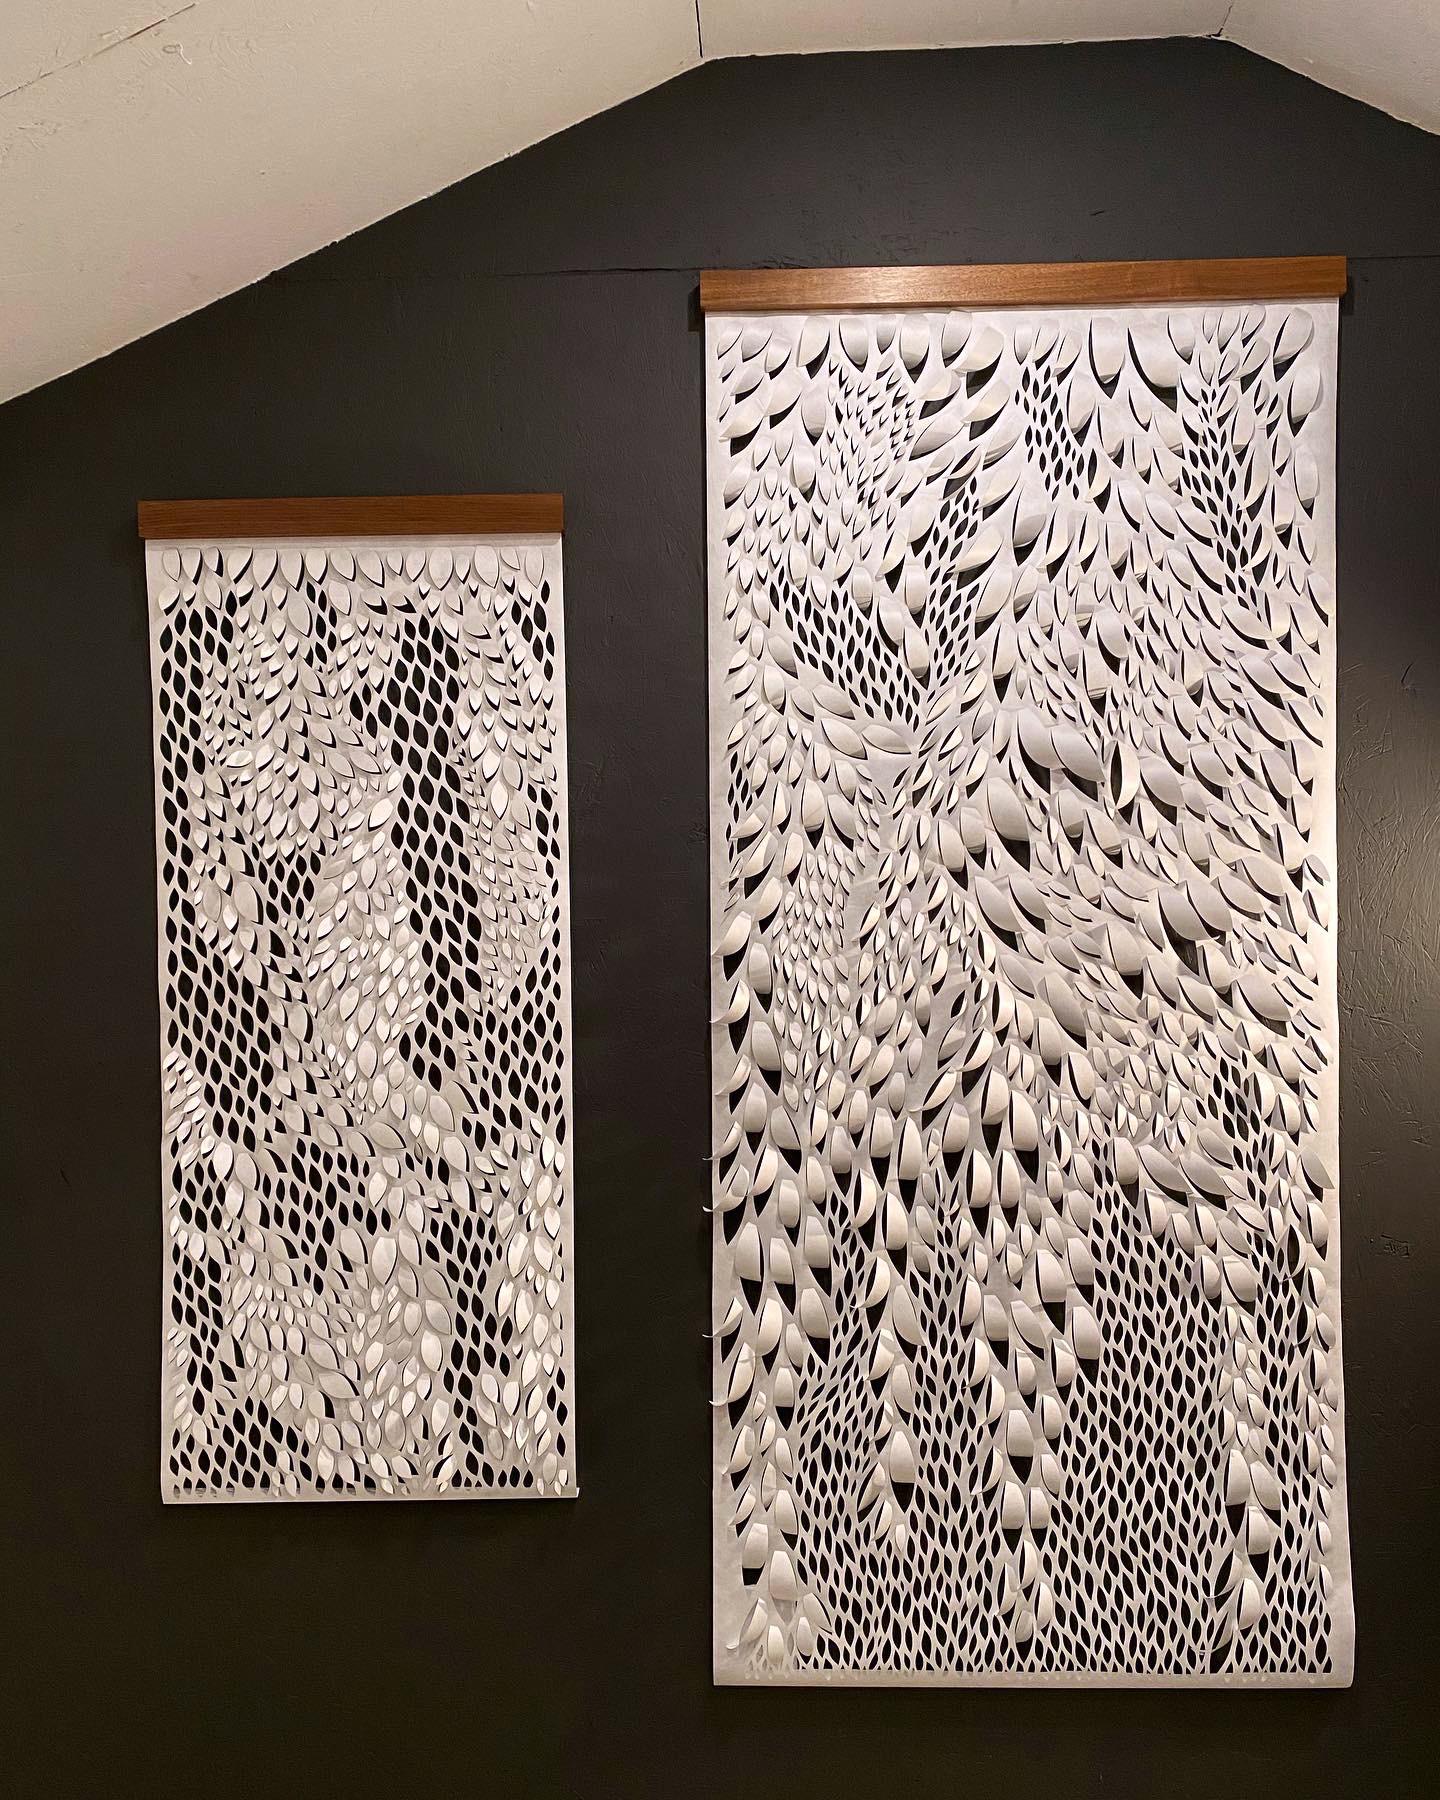 Hand-cut Paper Scroll, Organic Leaf like cut paper wall hangings 36x24 - Contemporary Mixed Media Art by Summer J. Hart